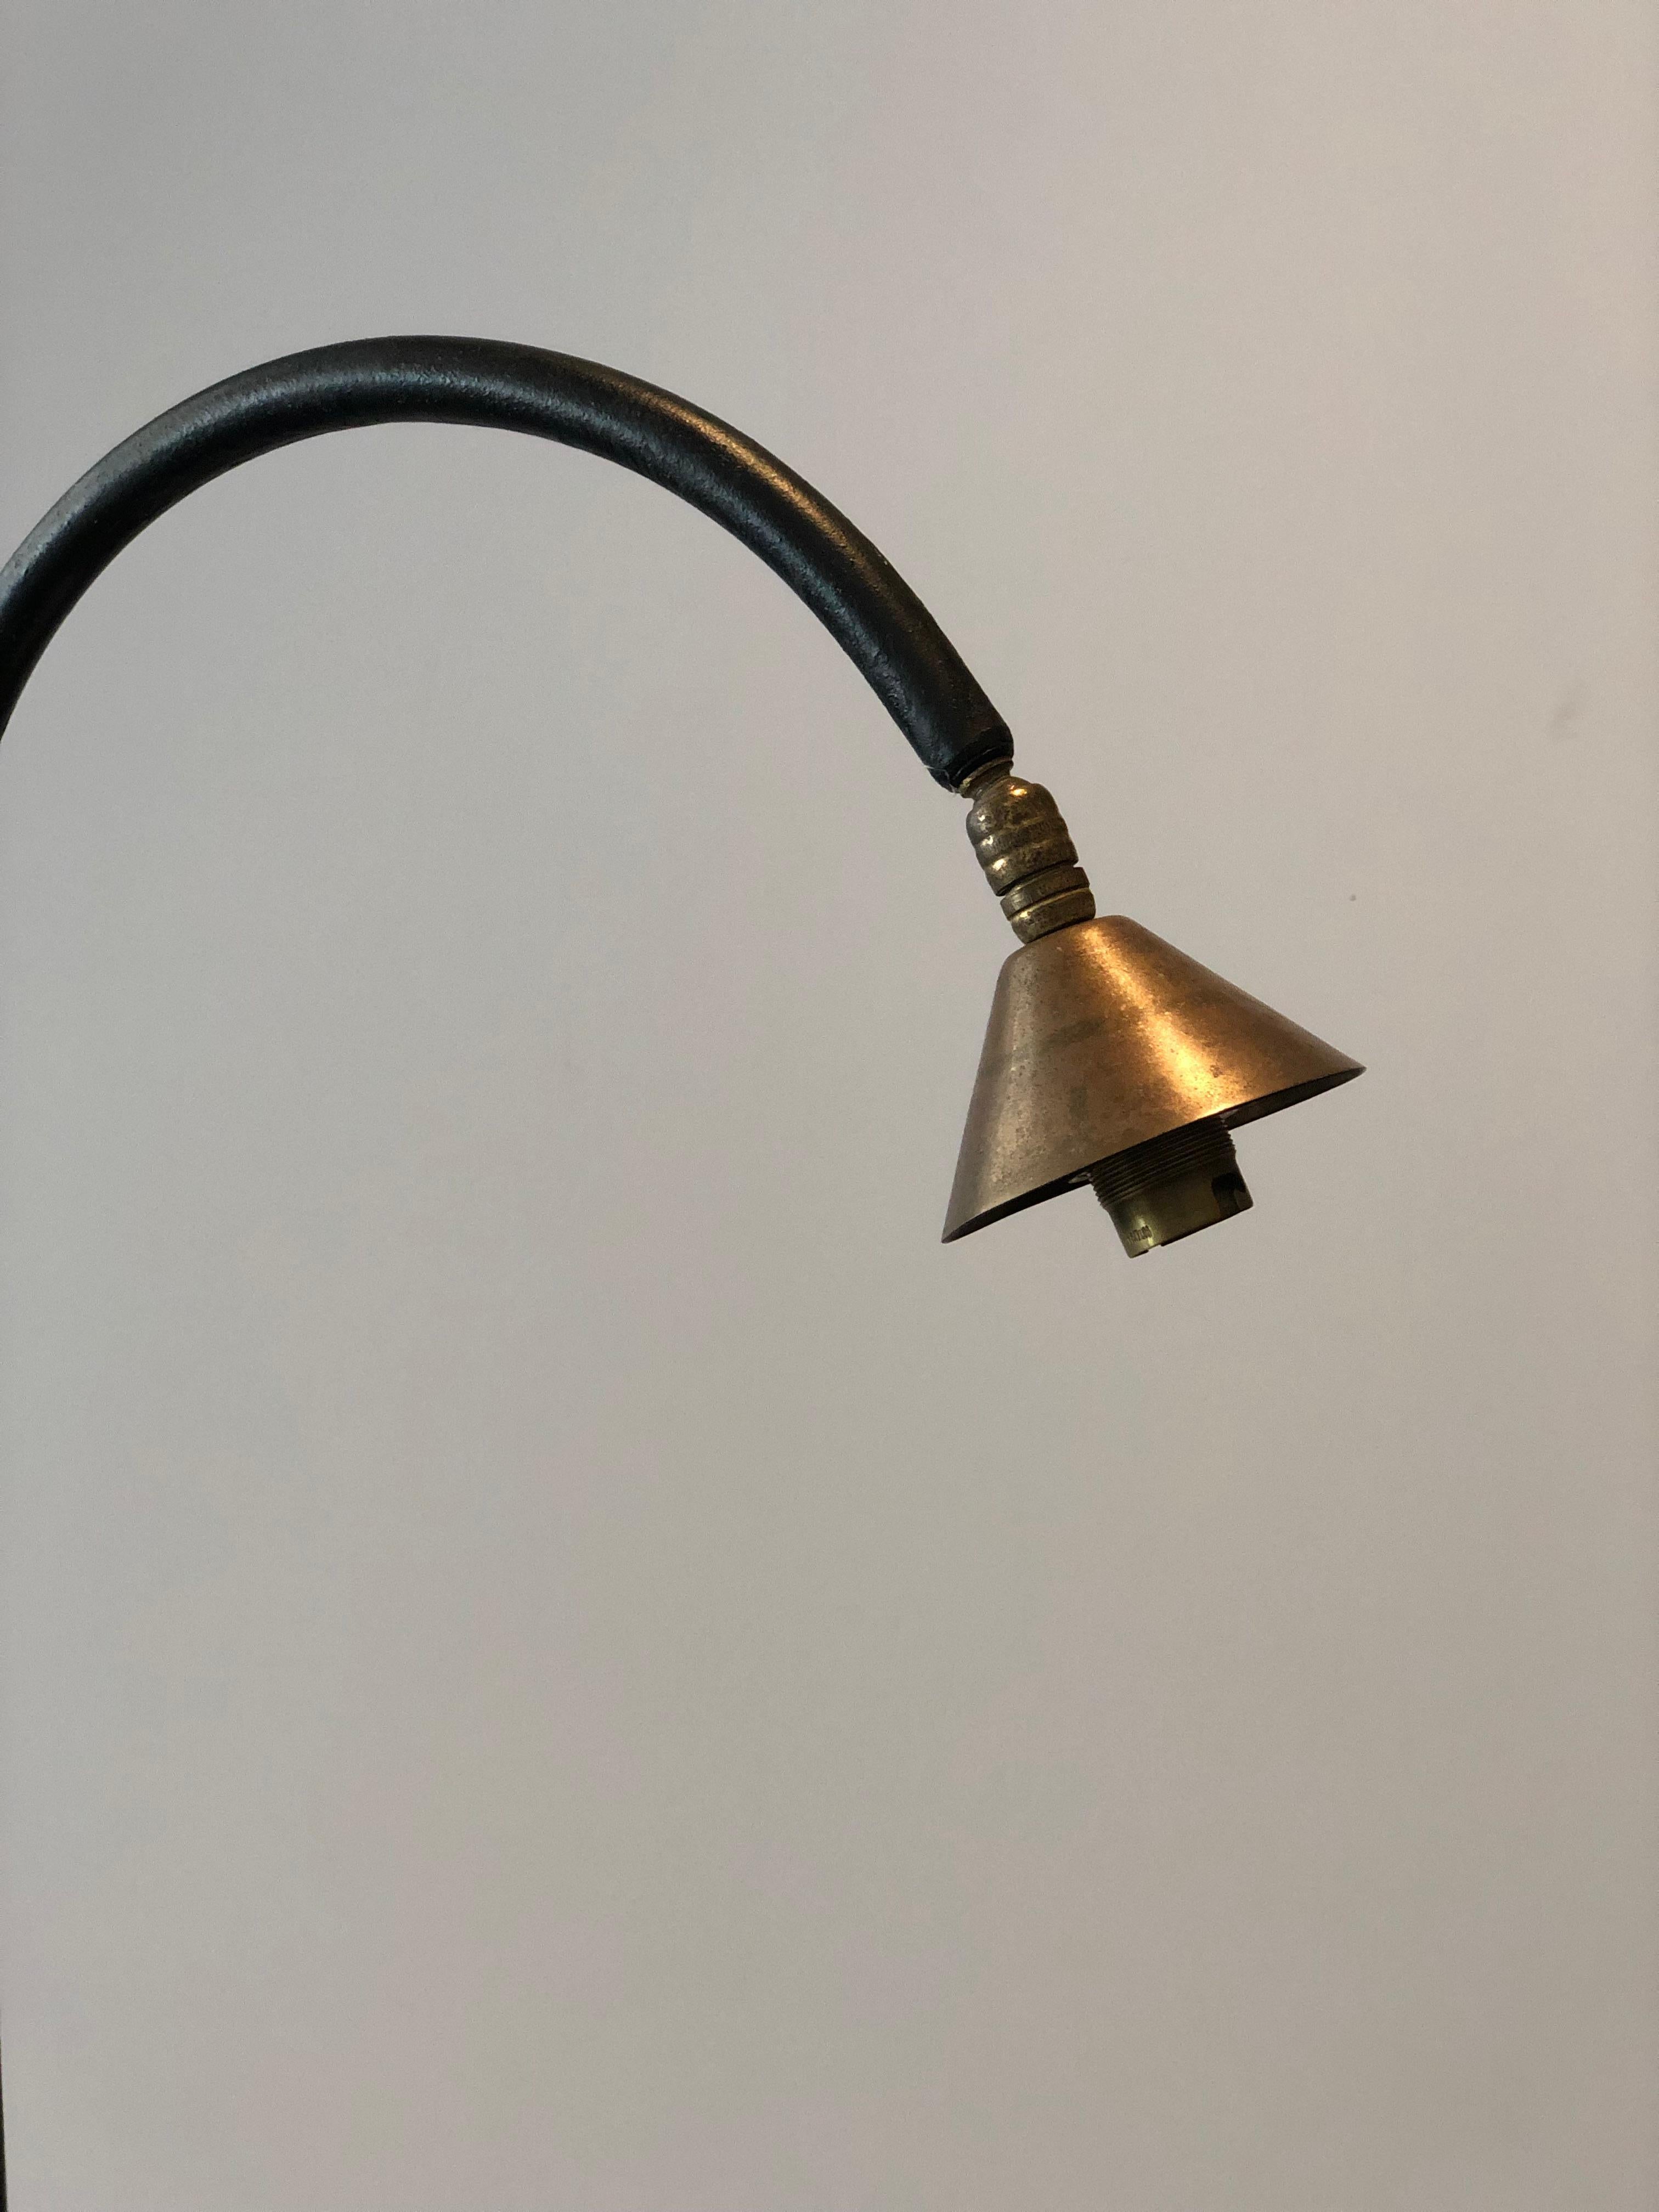 Italian modern floor lamp with brass shroud and blackened patinated steel base, circa 1950s.

 